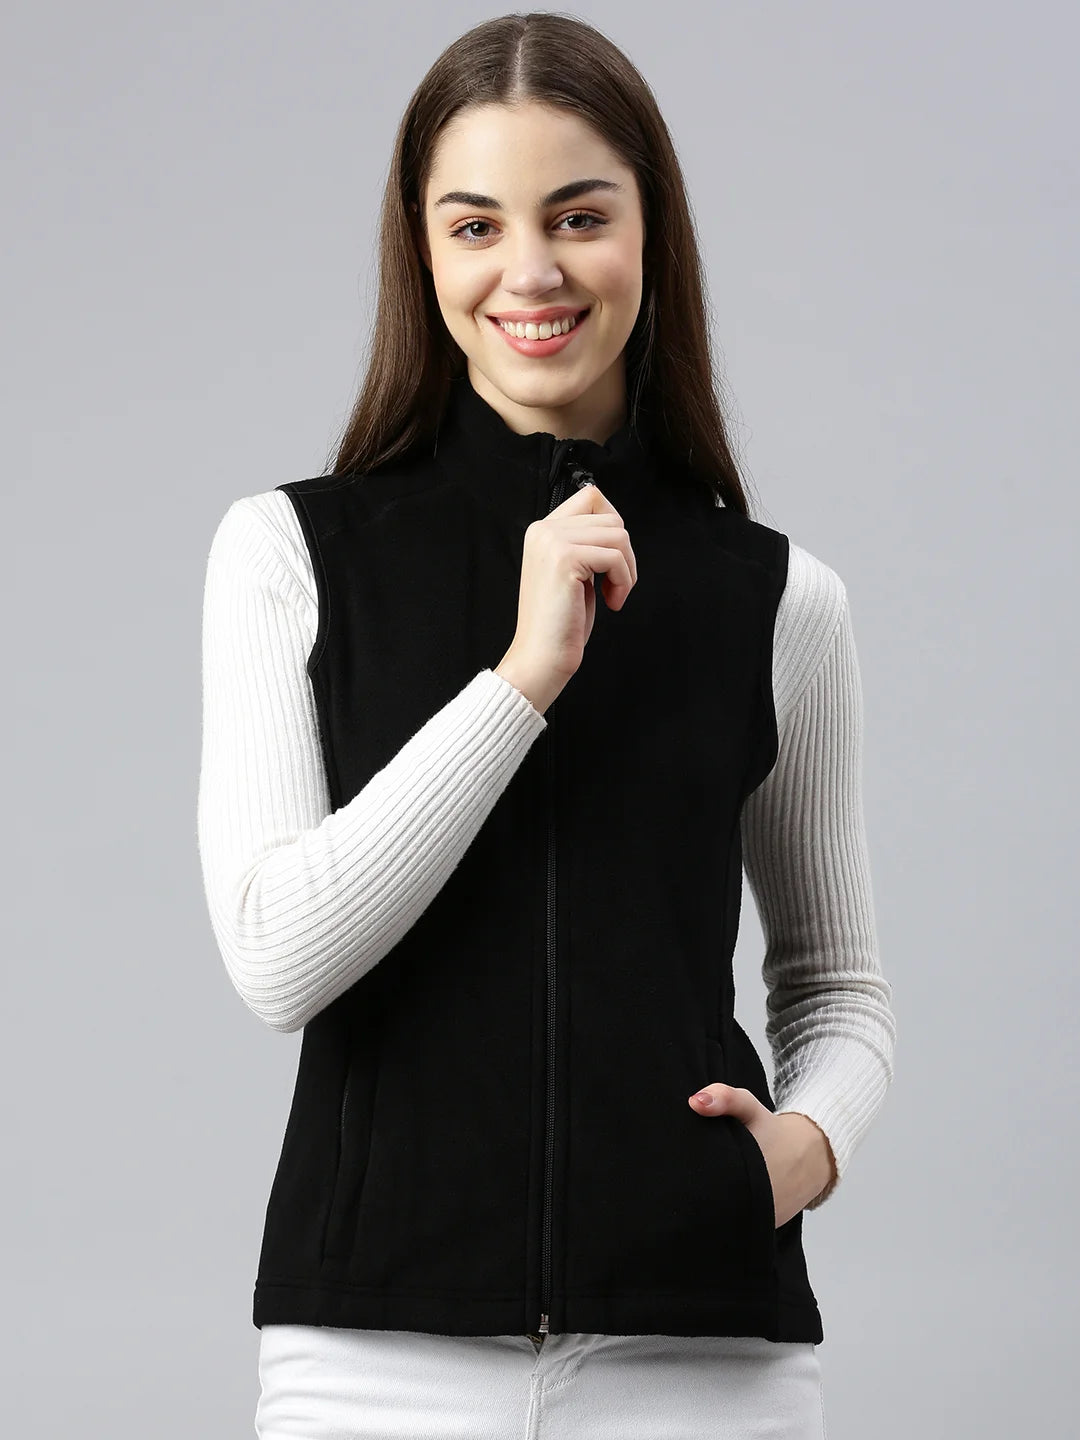 Women's Helsinki Fiber Fur Fleece Vest Noir Front